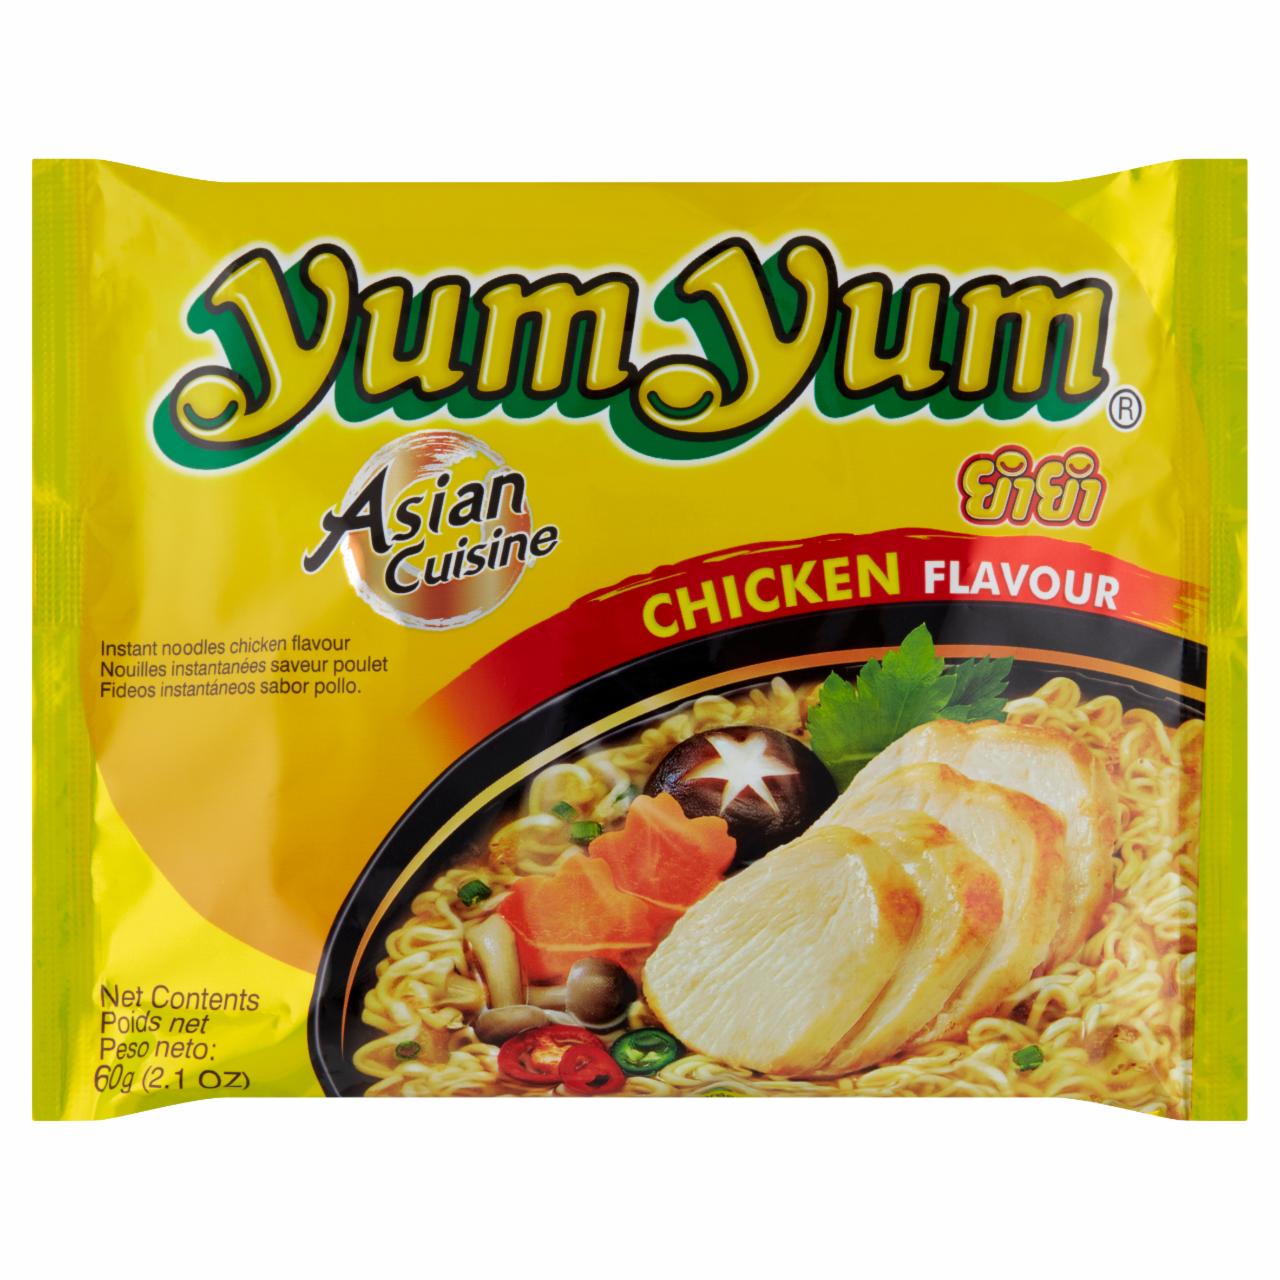 Zdjęcia - Chicken flavour instant noodles Yum Yum